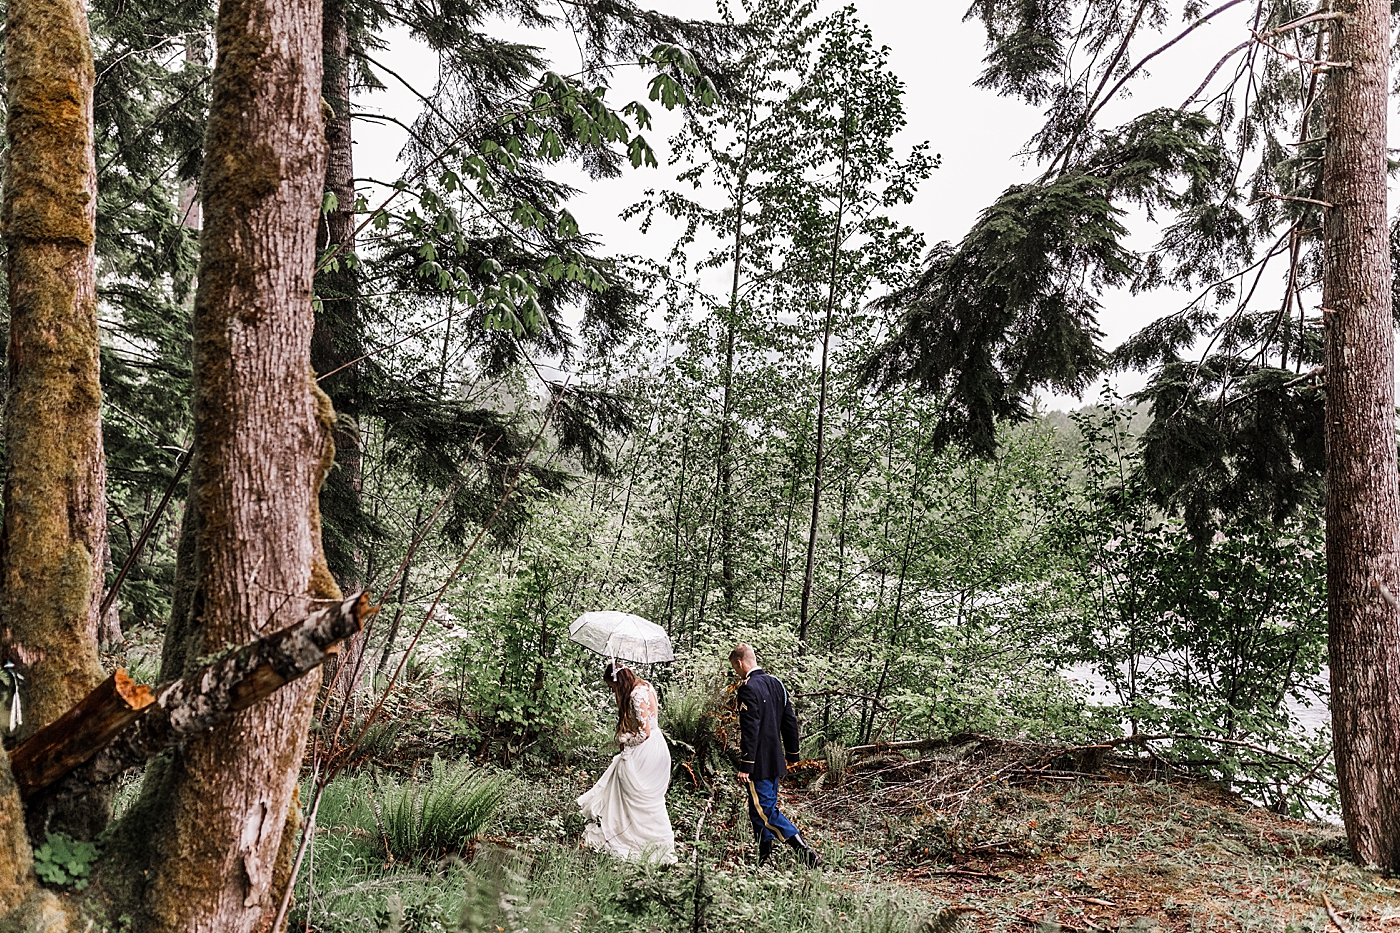 PNW Elopement in the rain at Mt. Rainier | Megan Montalvo Photography